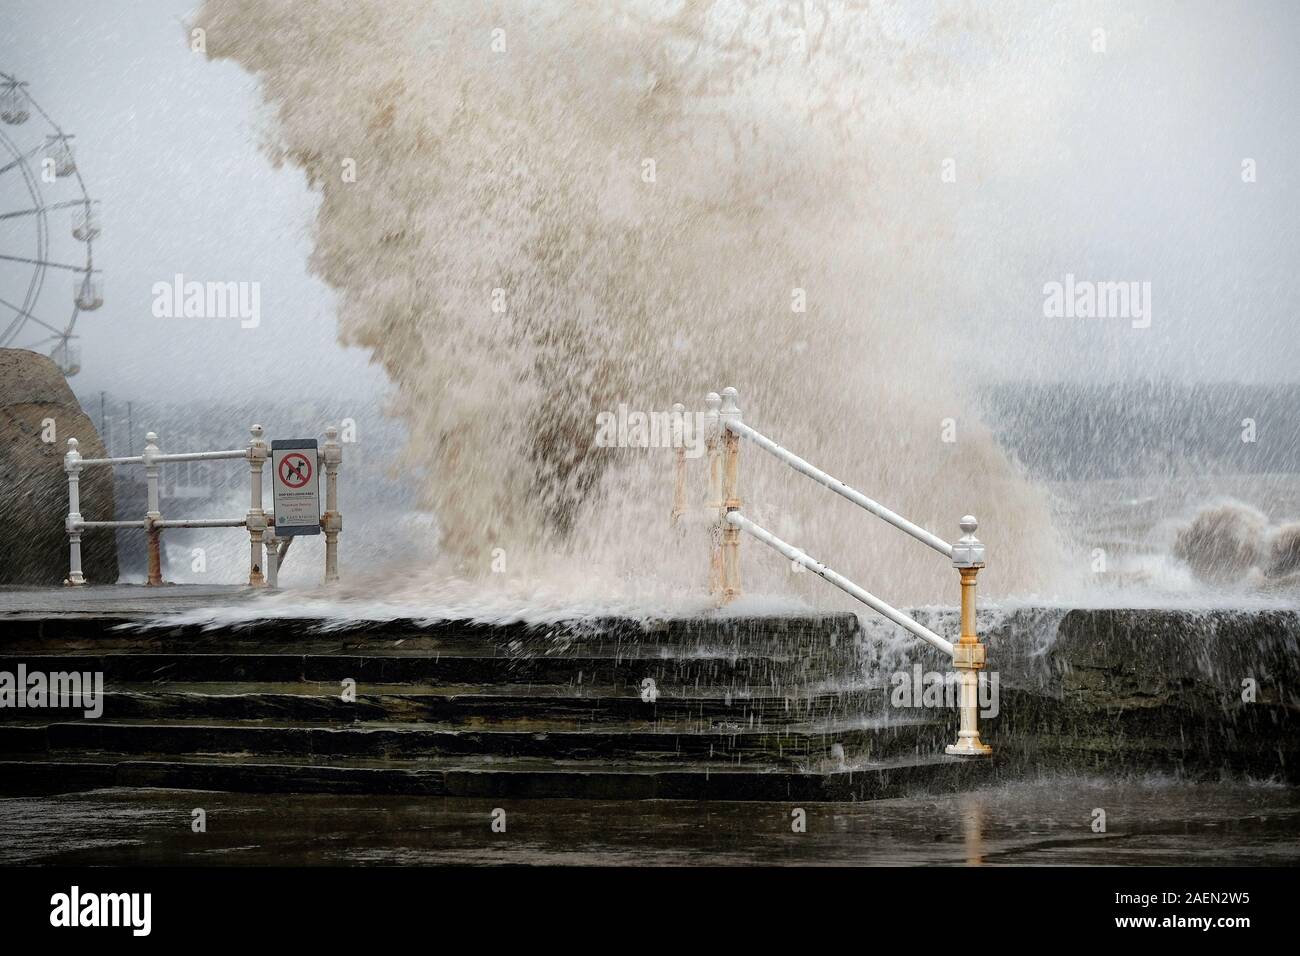 Heavy rough seas at high tide at Bridlington, Yorkshire, UK. Stock Photo